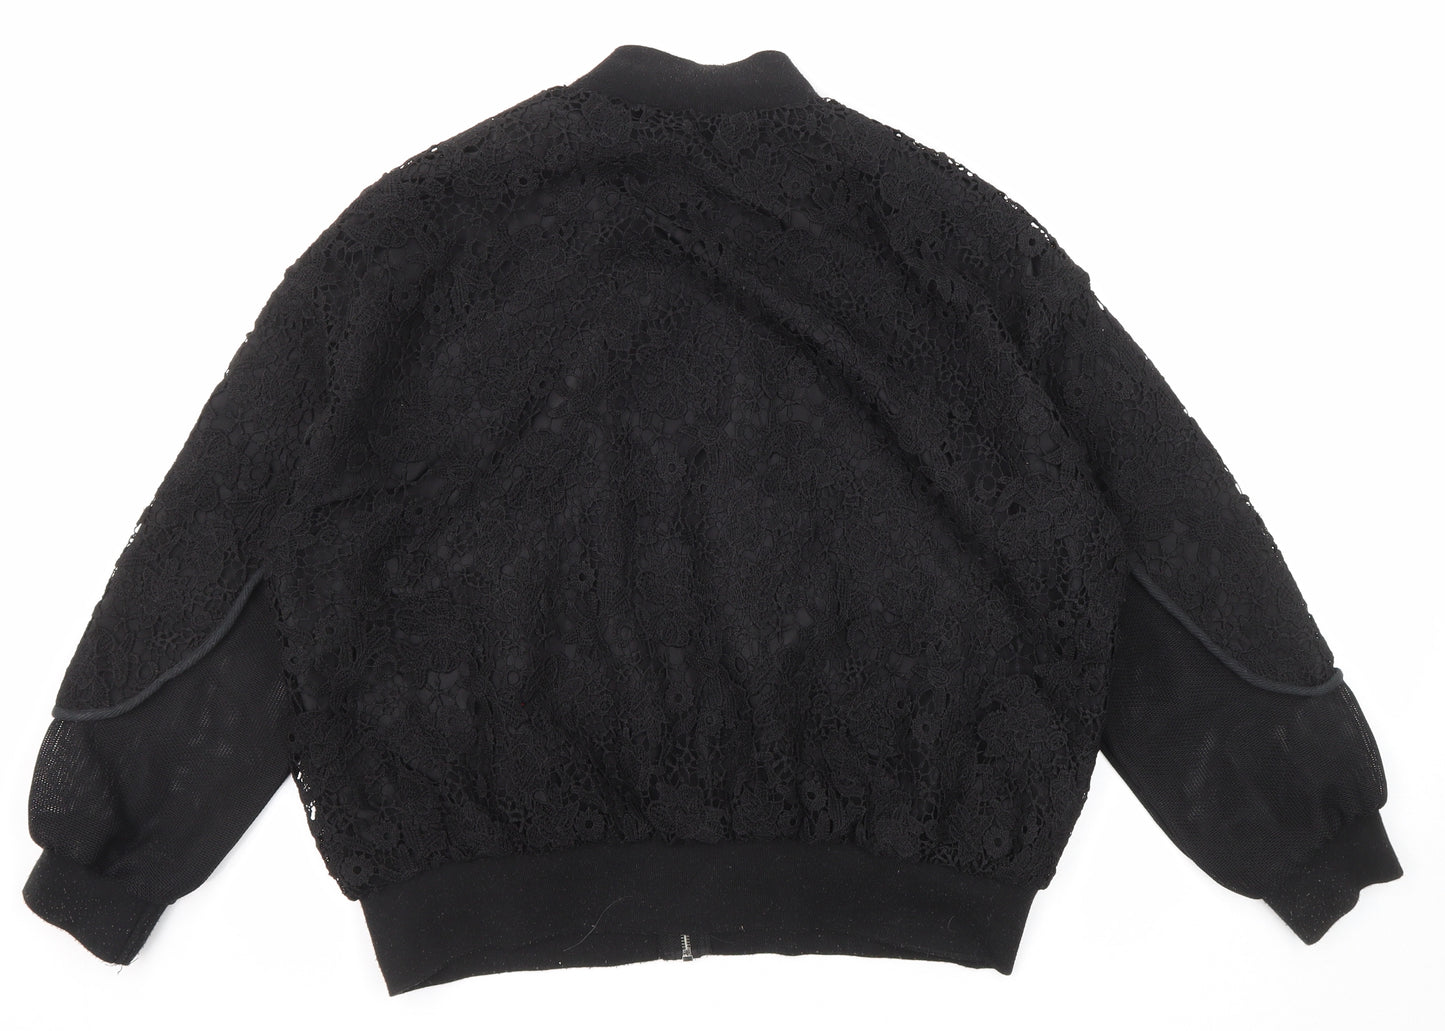 Zara Womens Black Bomber Jacket Jacket Size M Zip